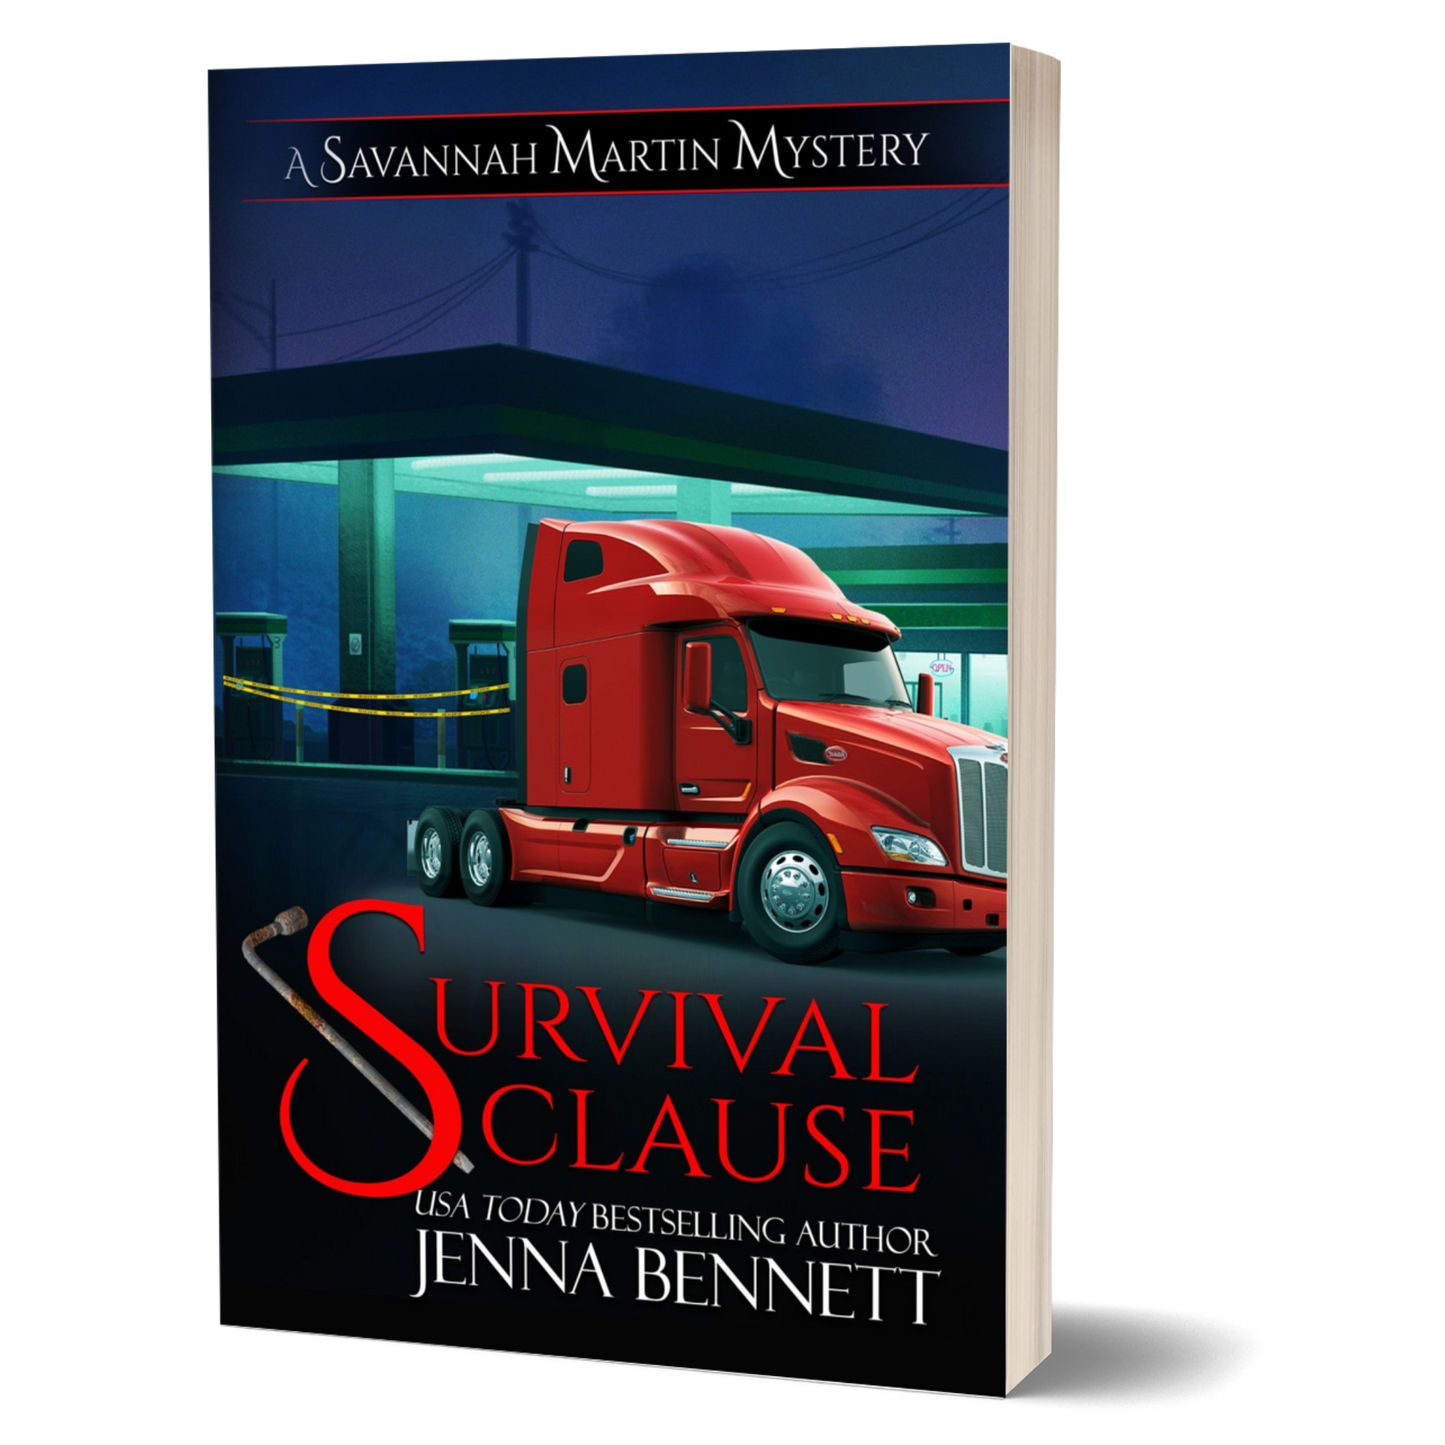 Survival Clause paperback - Savannah Martin Mysteries #20